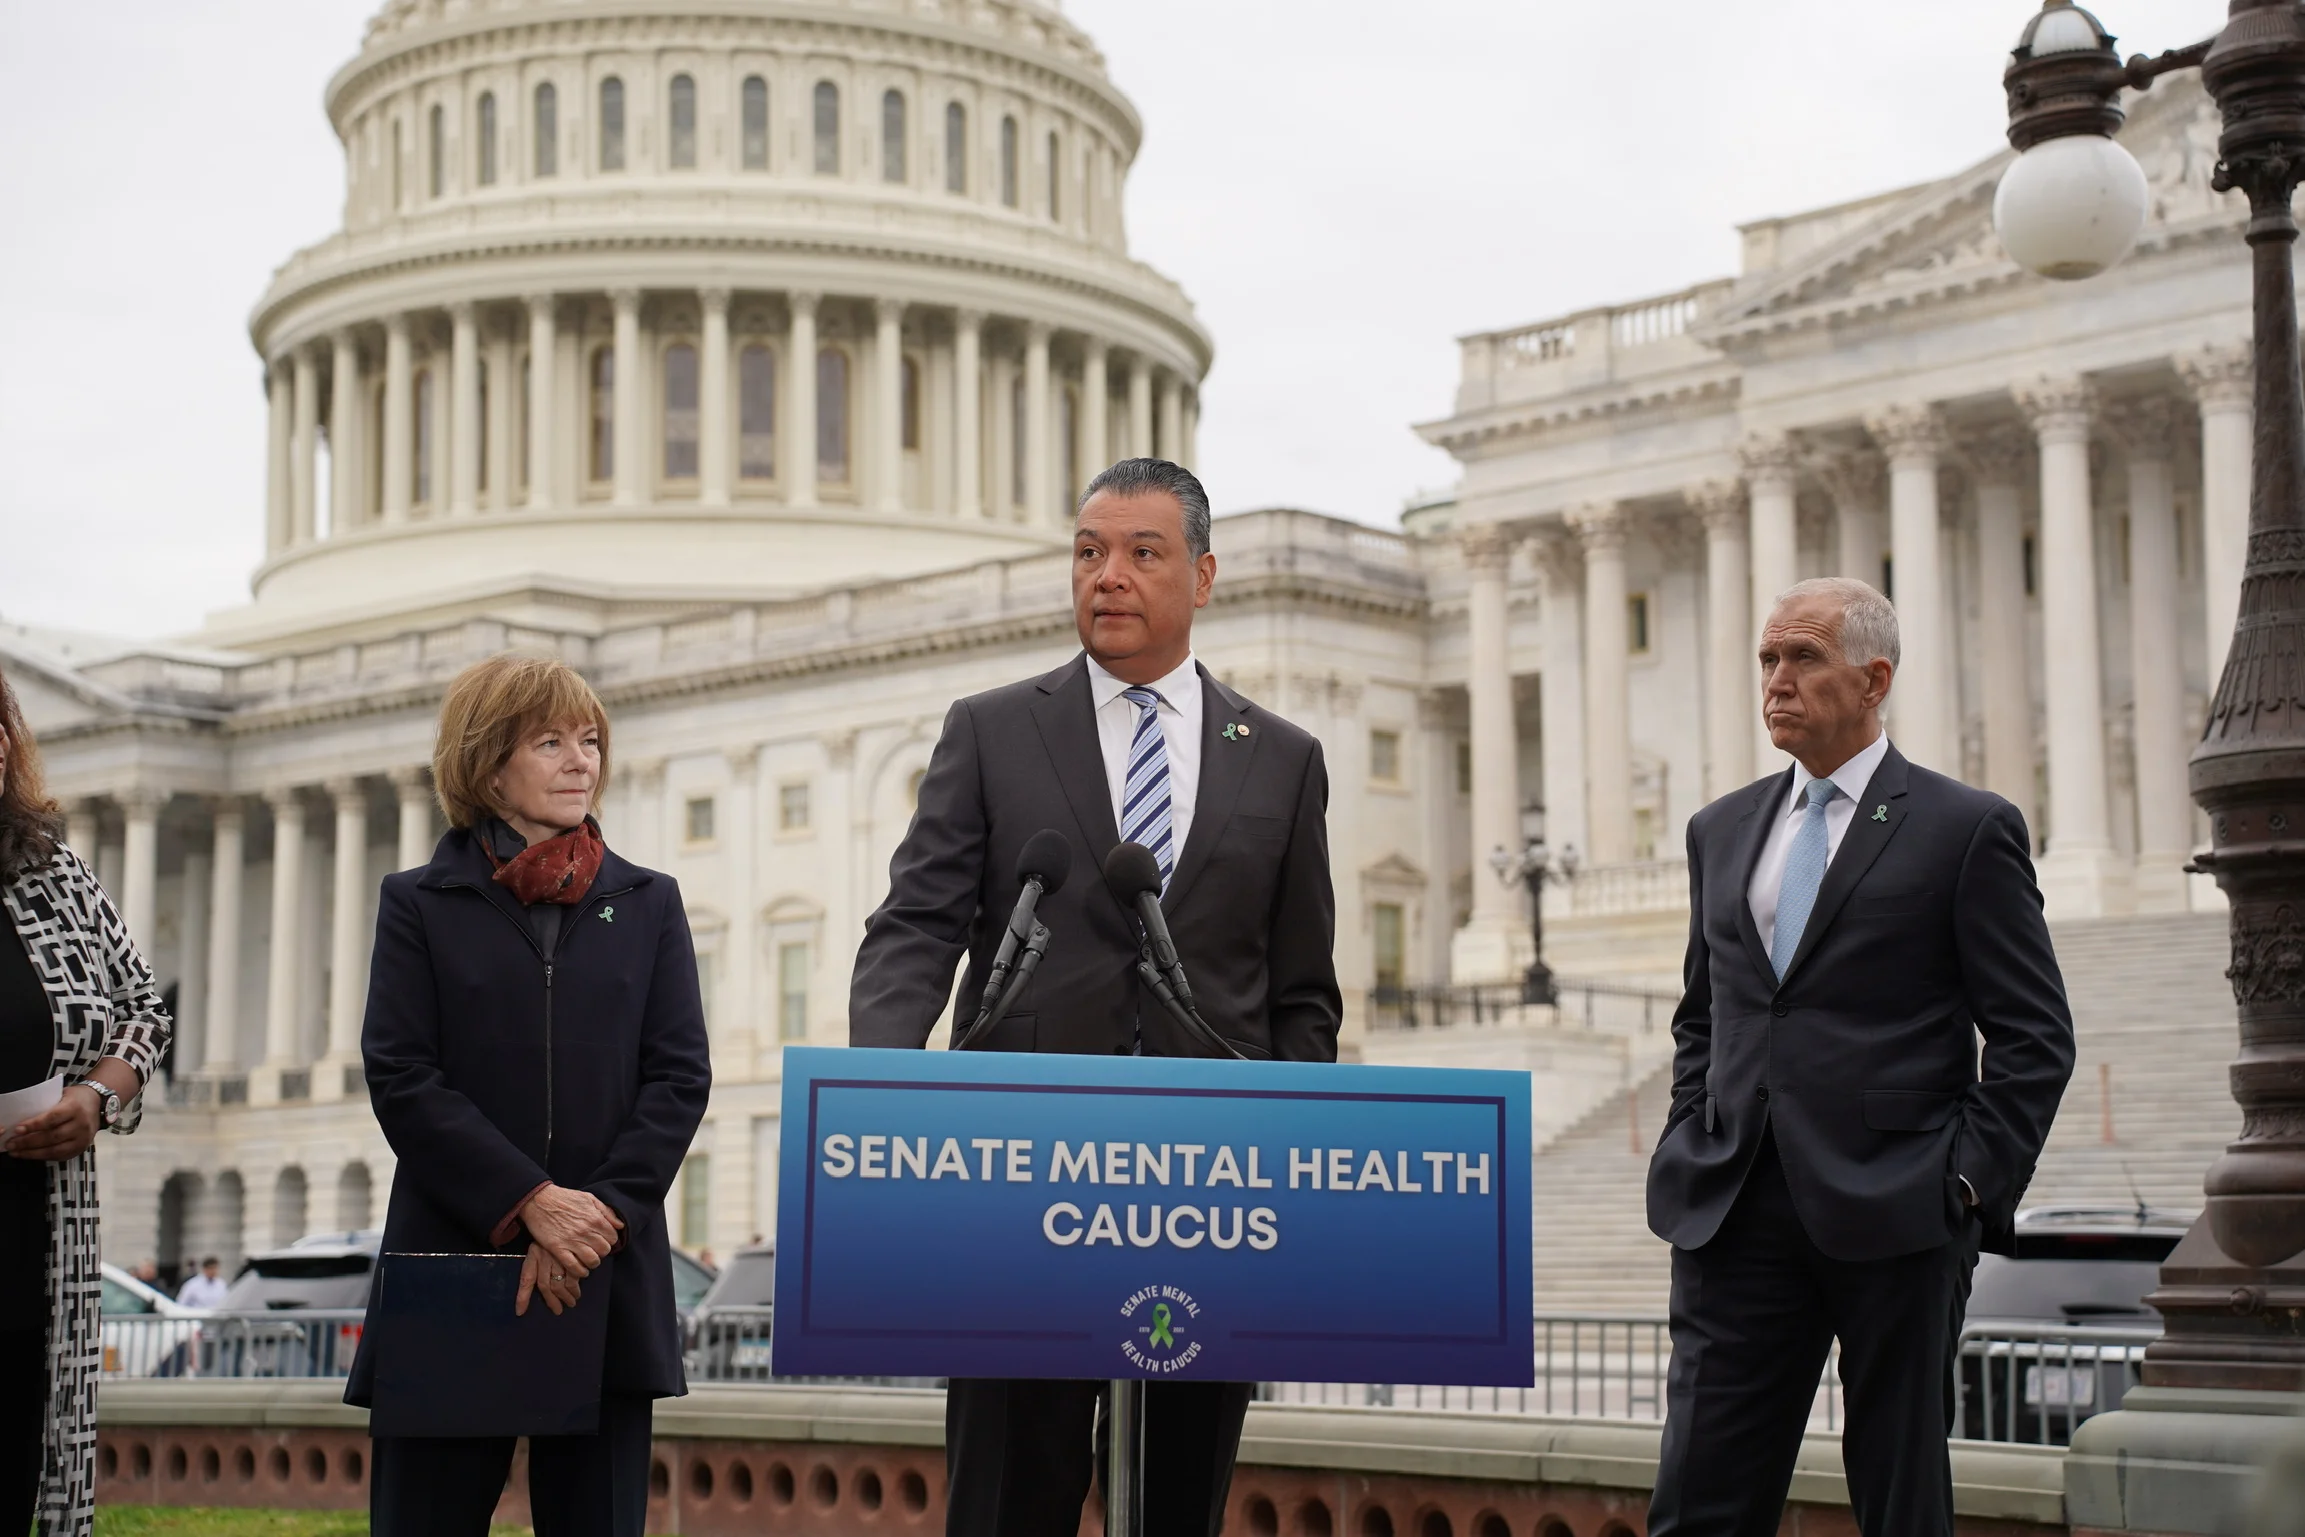 Senate Mental Health Caucus Launch